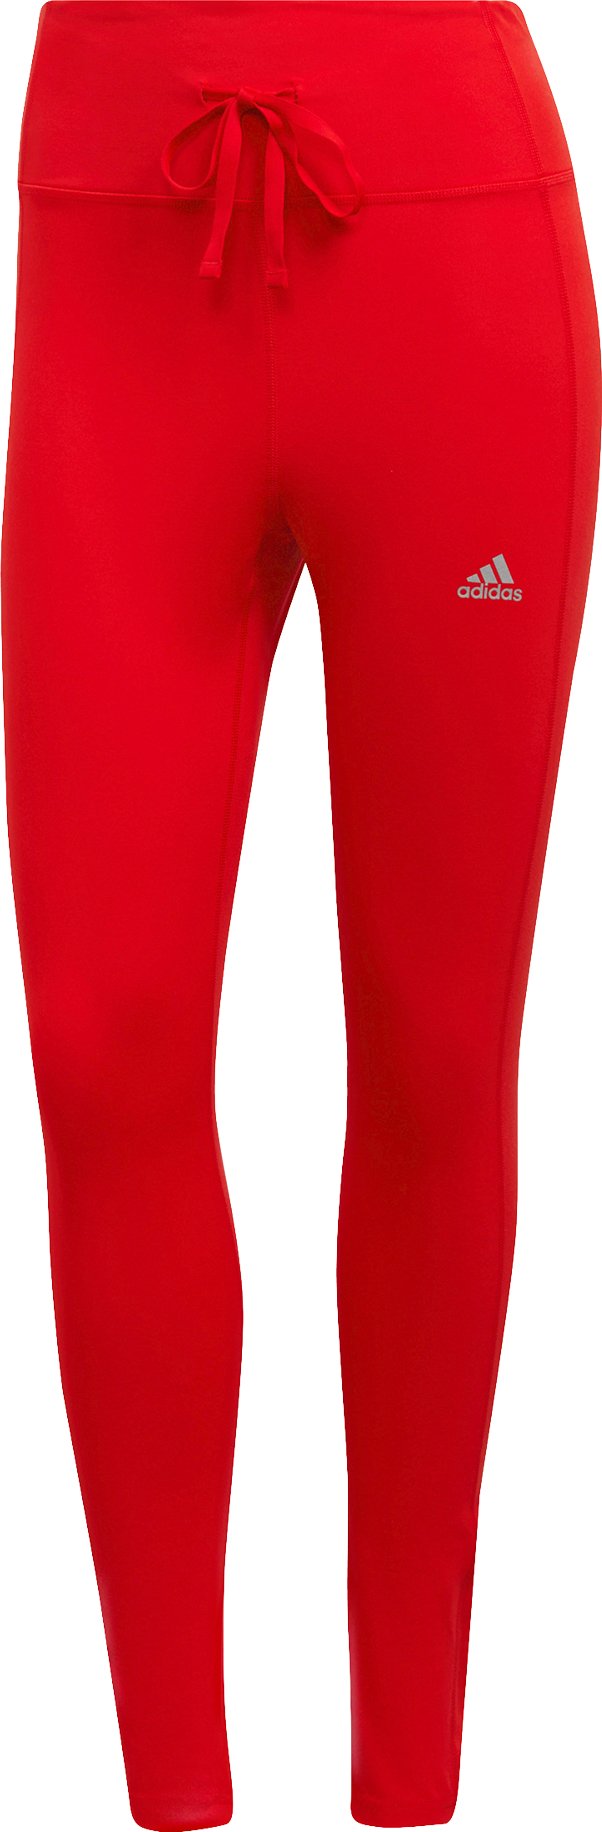 adidas Leggings - Red